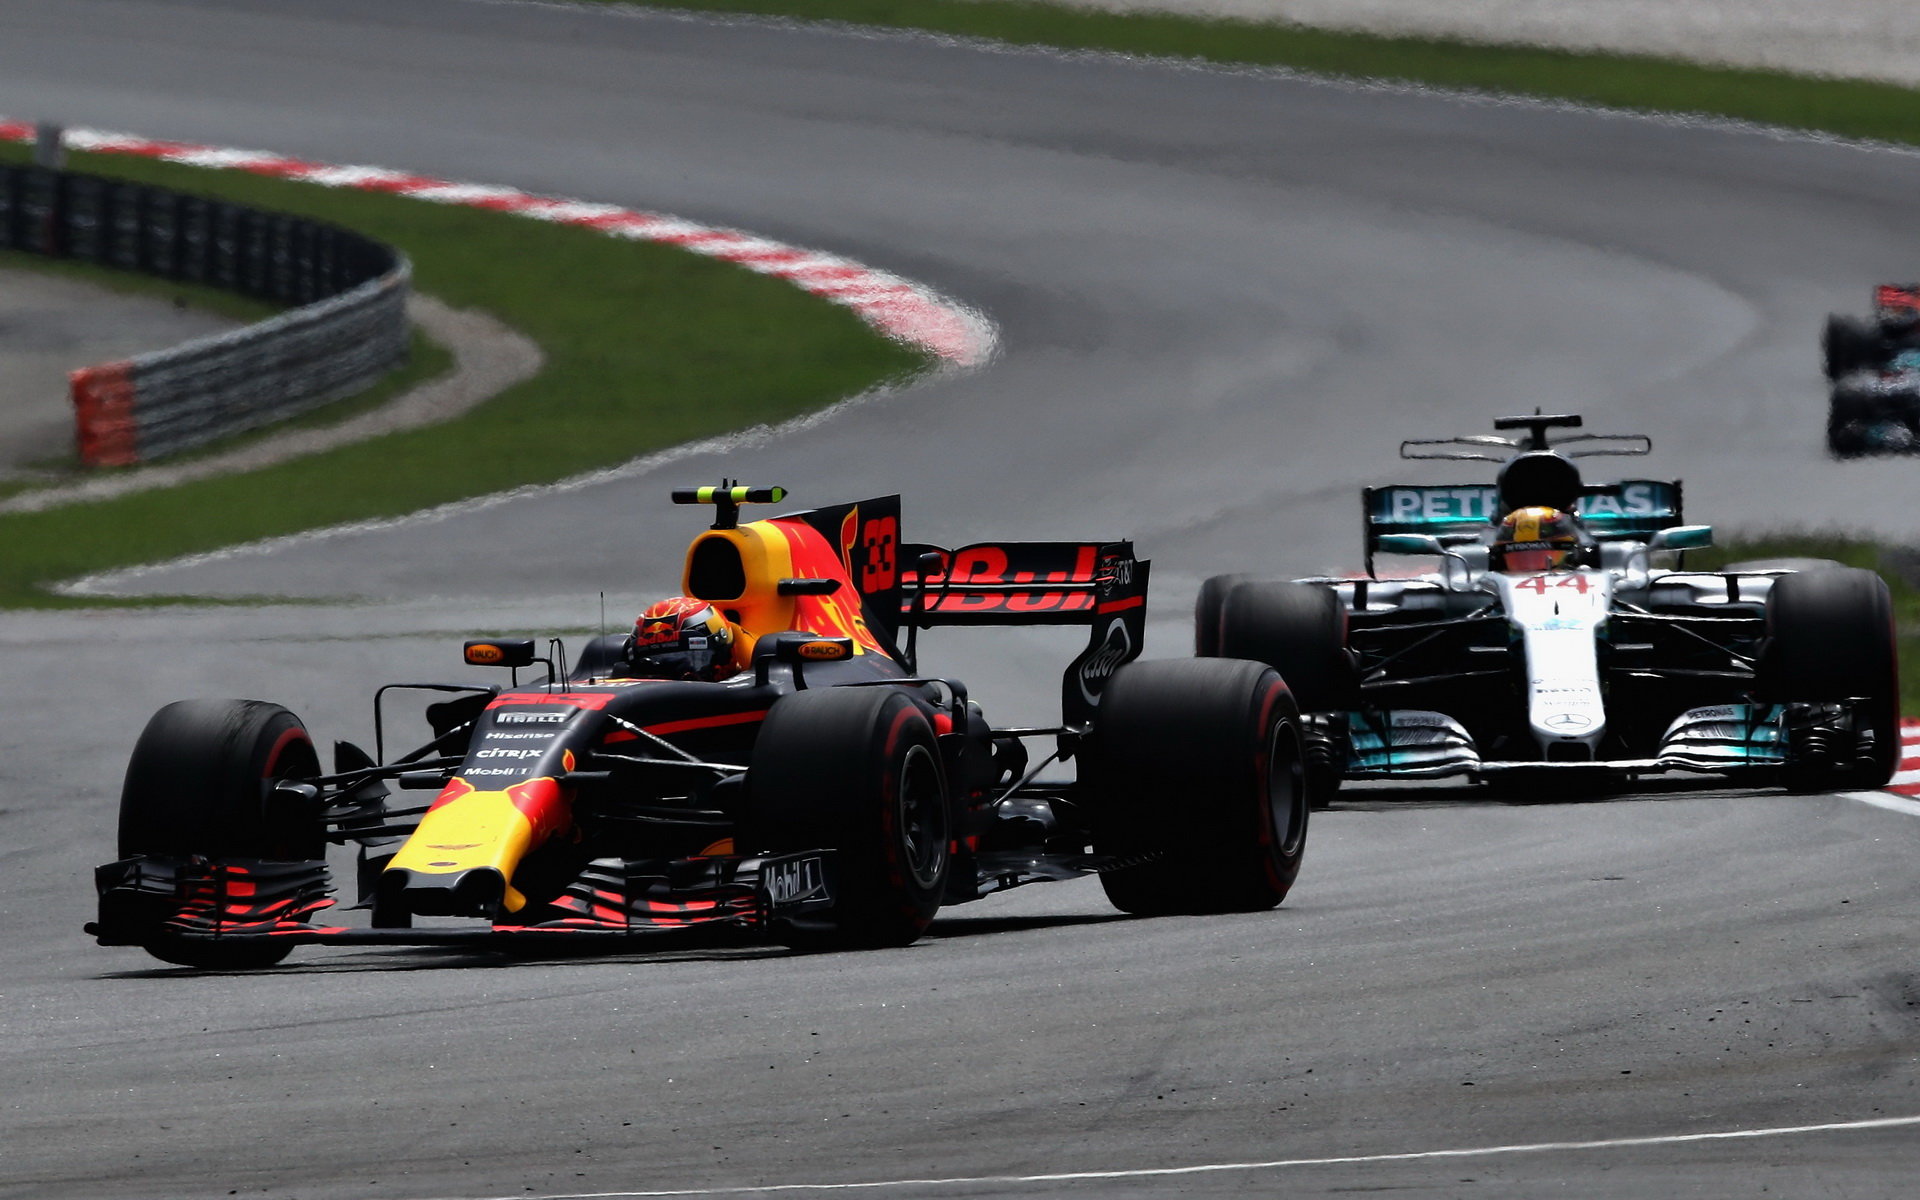 Max Verstappen a Lewis Hamilton v závodě v Malajsii